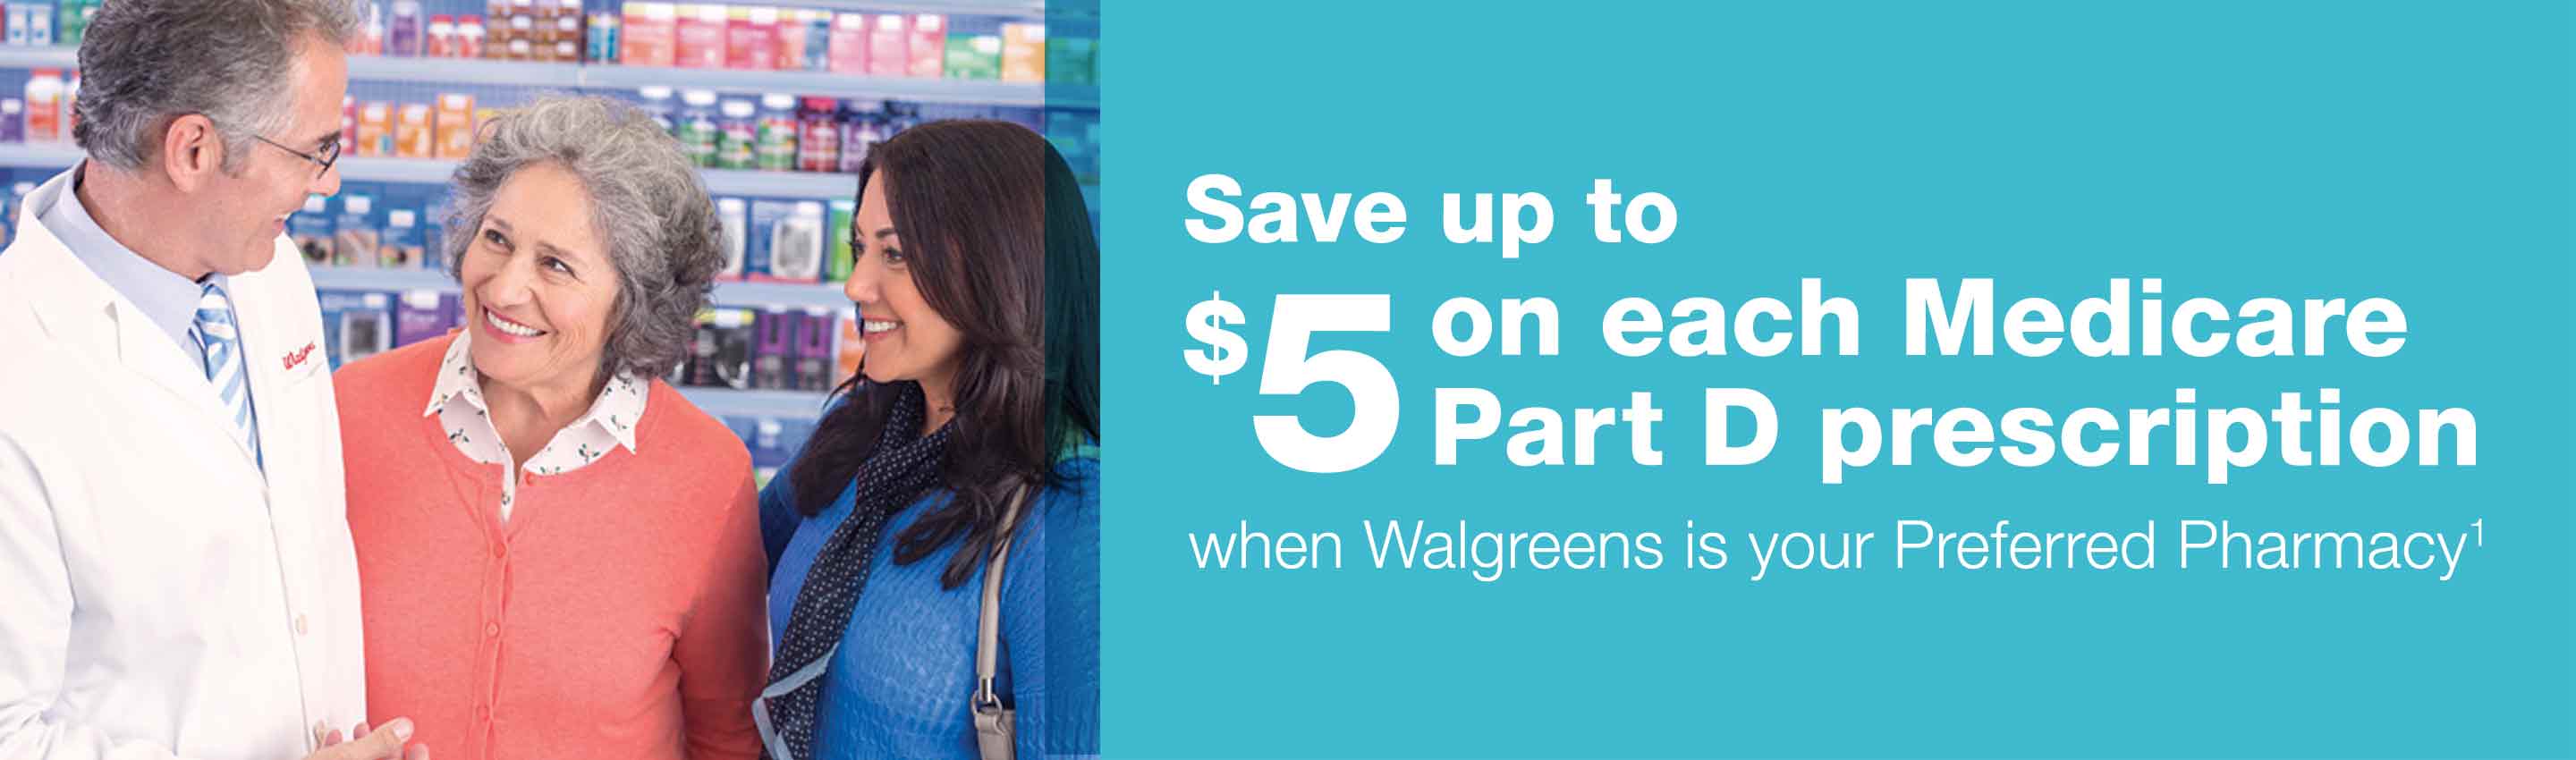 Medicare Drug Plan Savings Walgreens